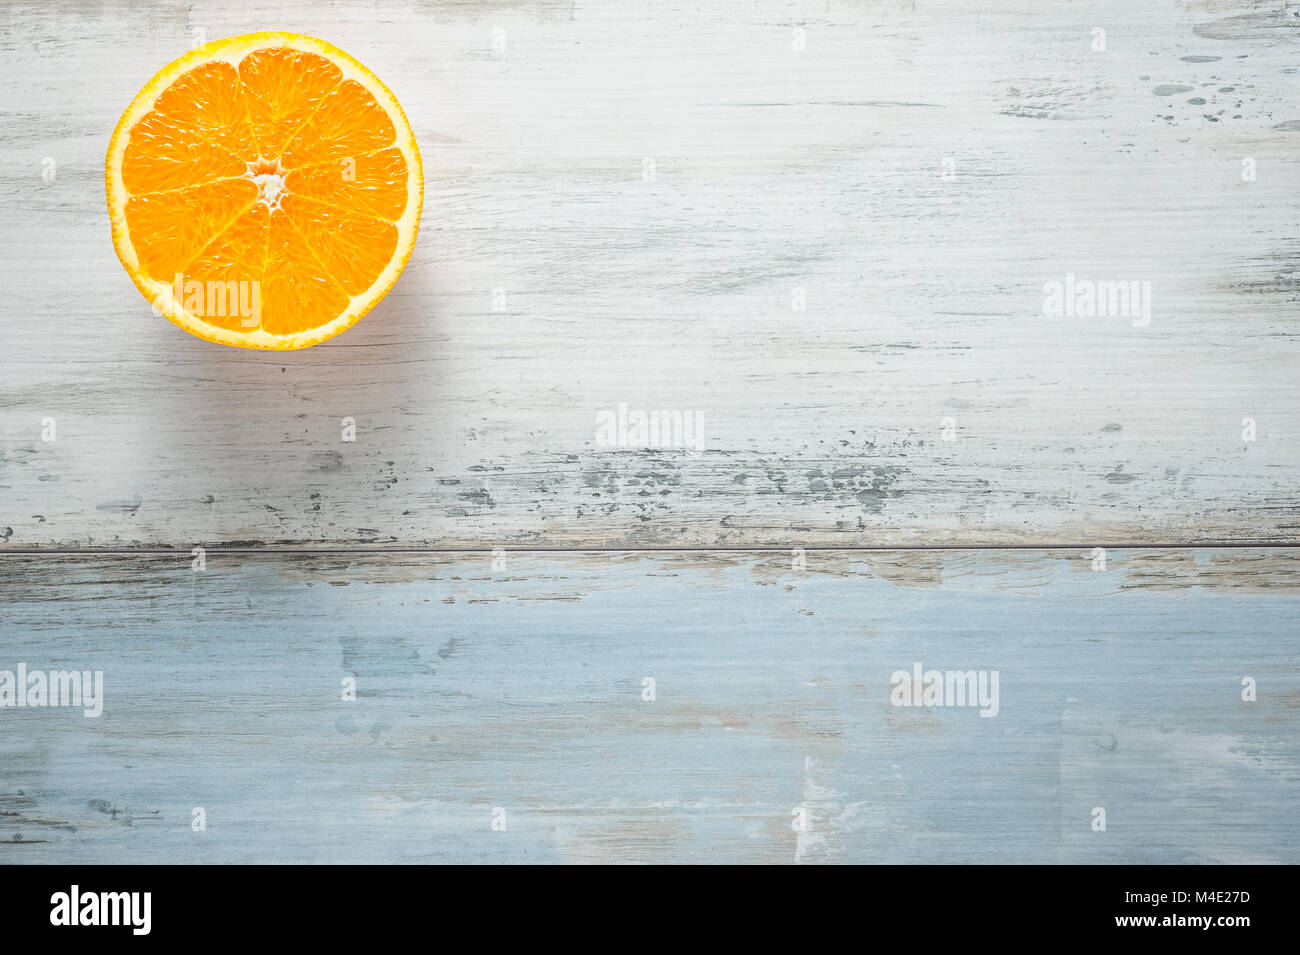 https://c8.alamy.com/comp/M4E27D/one-slice-of-fresh-oranges-on-painted-wooden-board-M4E27D.jpg